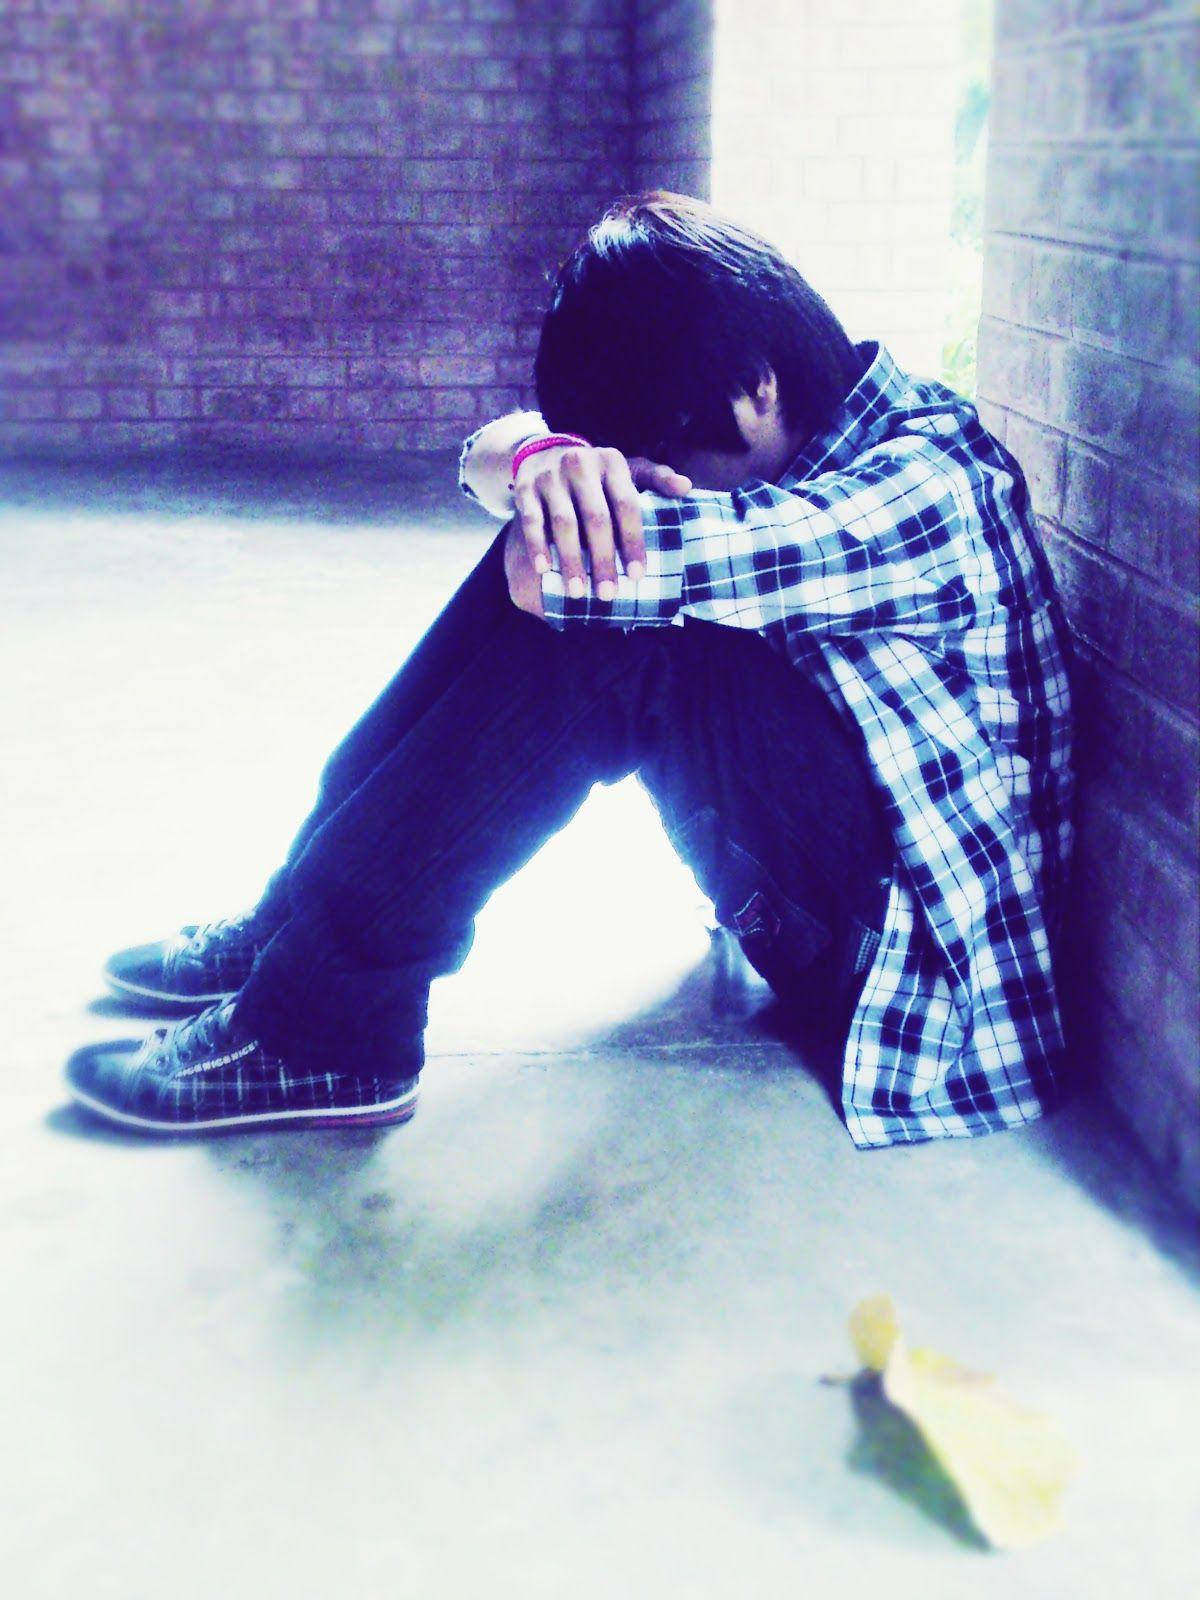 Alone Boy In Gloomy Image Wallpaper